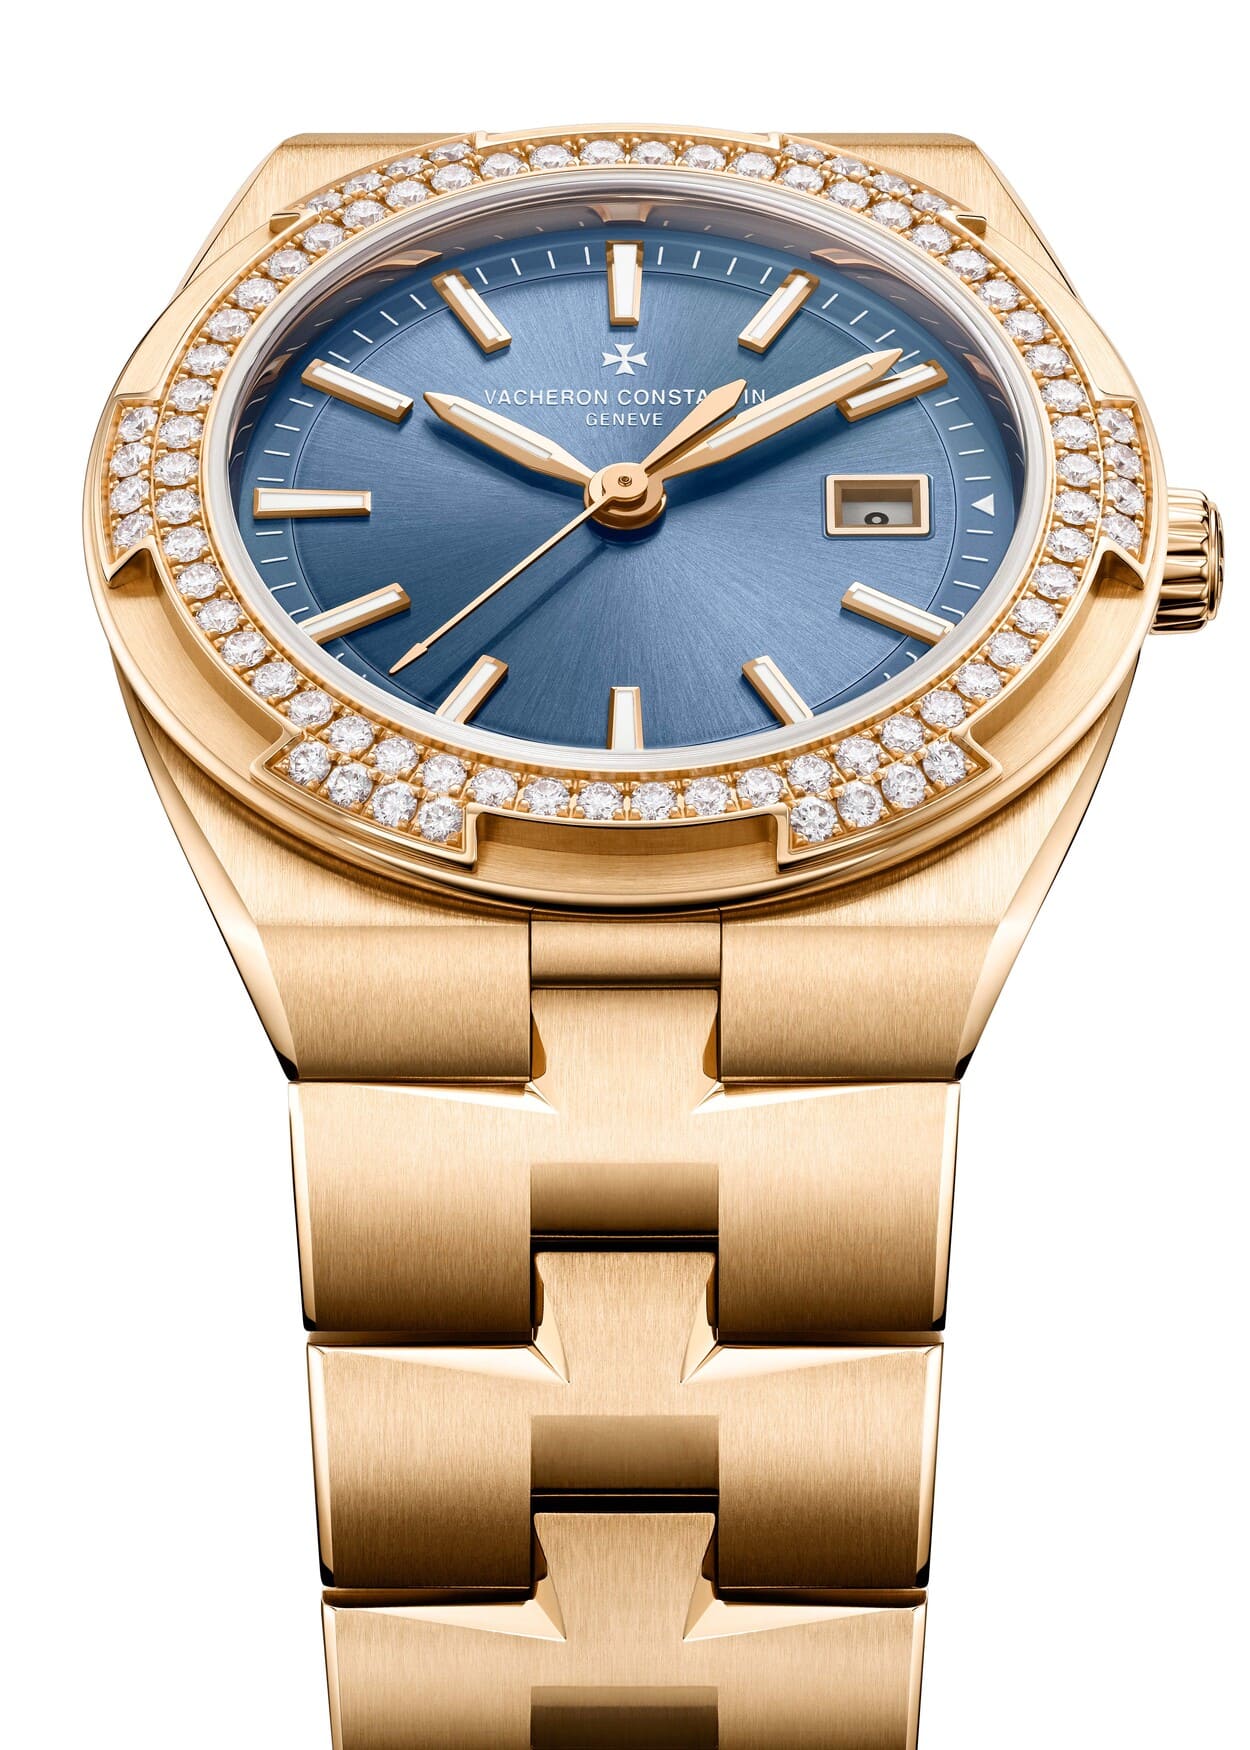 Overseas quartz 33 mm watch combines a bezel with 78 diamonds and a denim blue dial